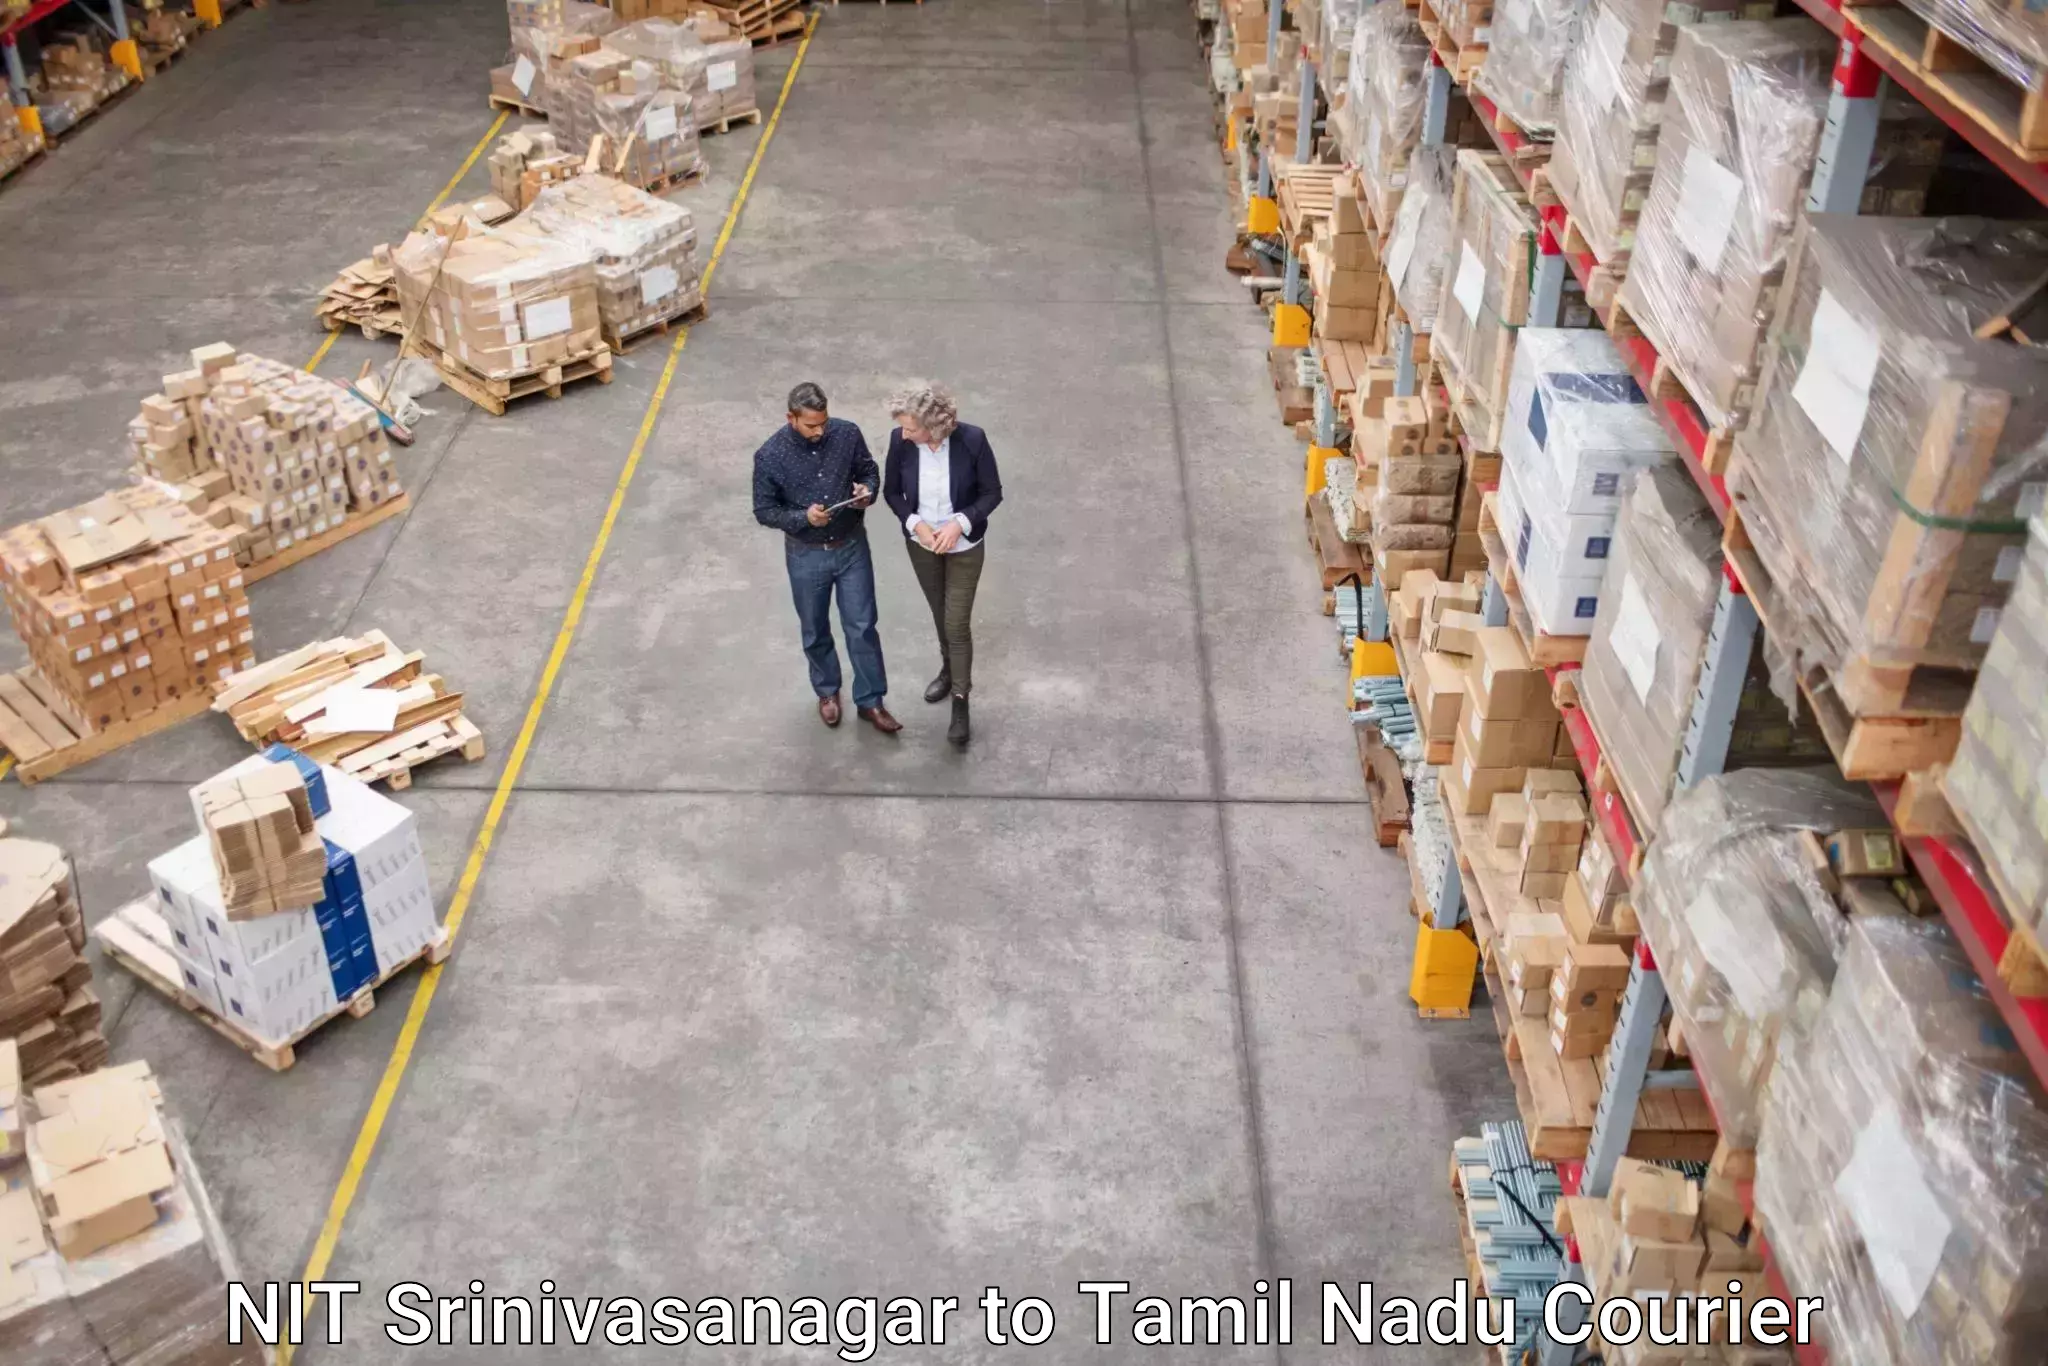 High-priority parcel service NIT Srinivasanagar to Chennai Port